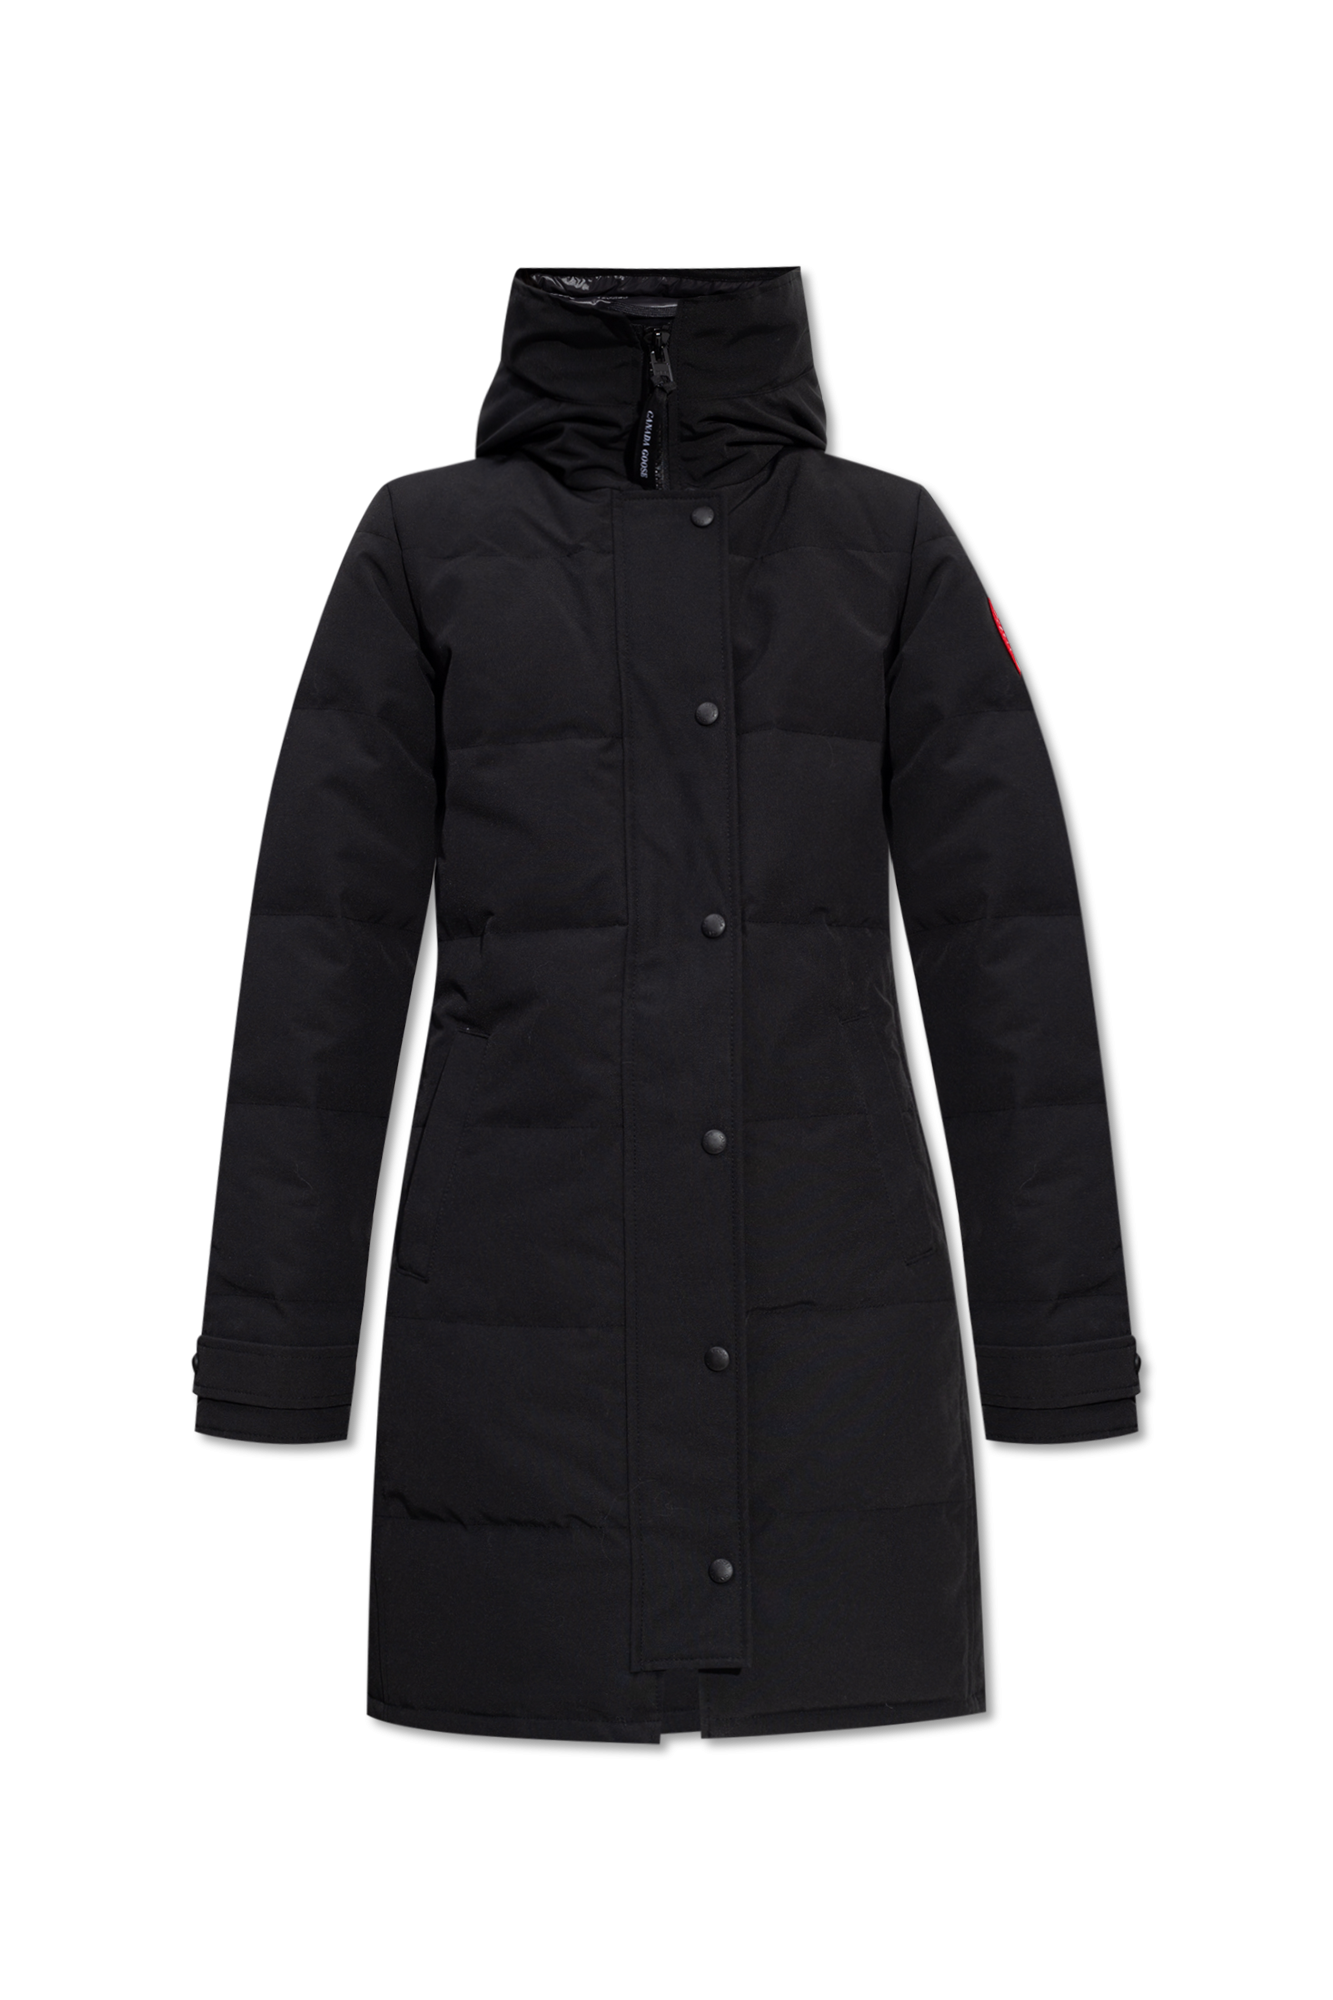 Black Down vest with logo Canada Goose - Vitkac Canada